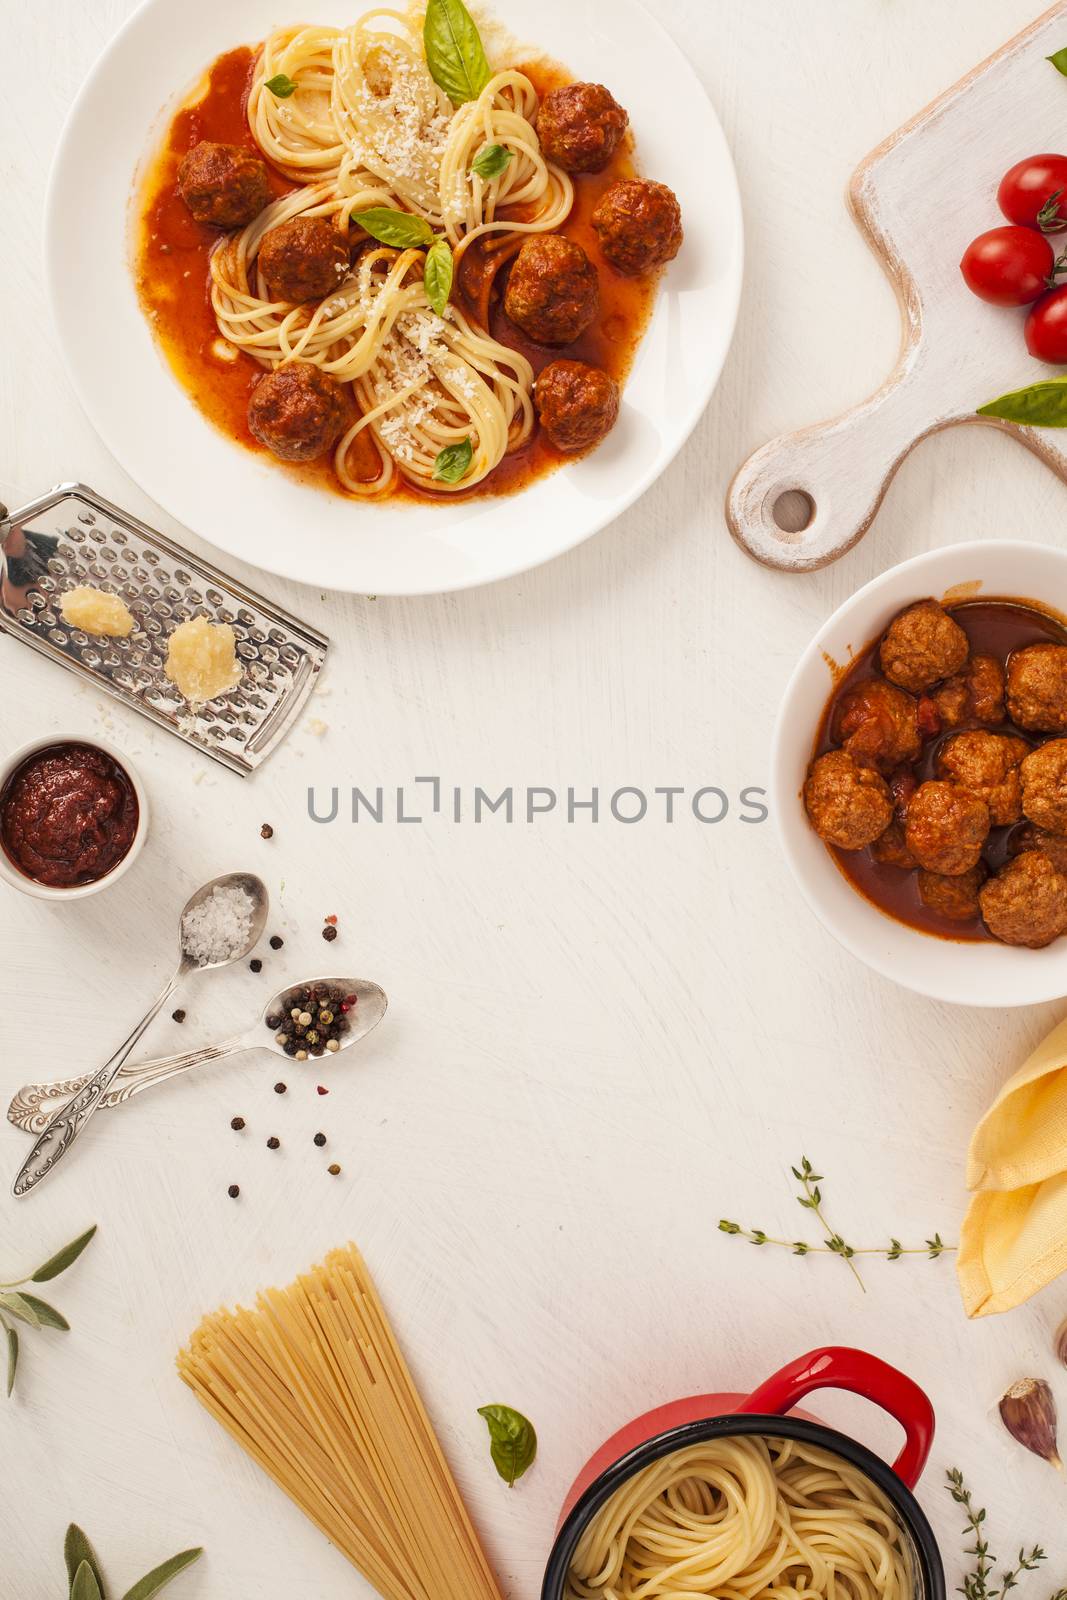 Spaghetti with meatballs by mariakomar